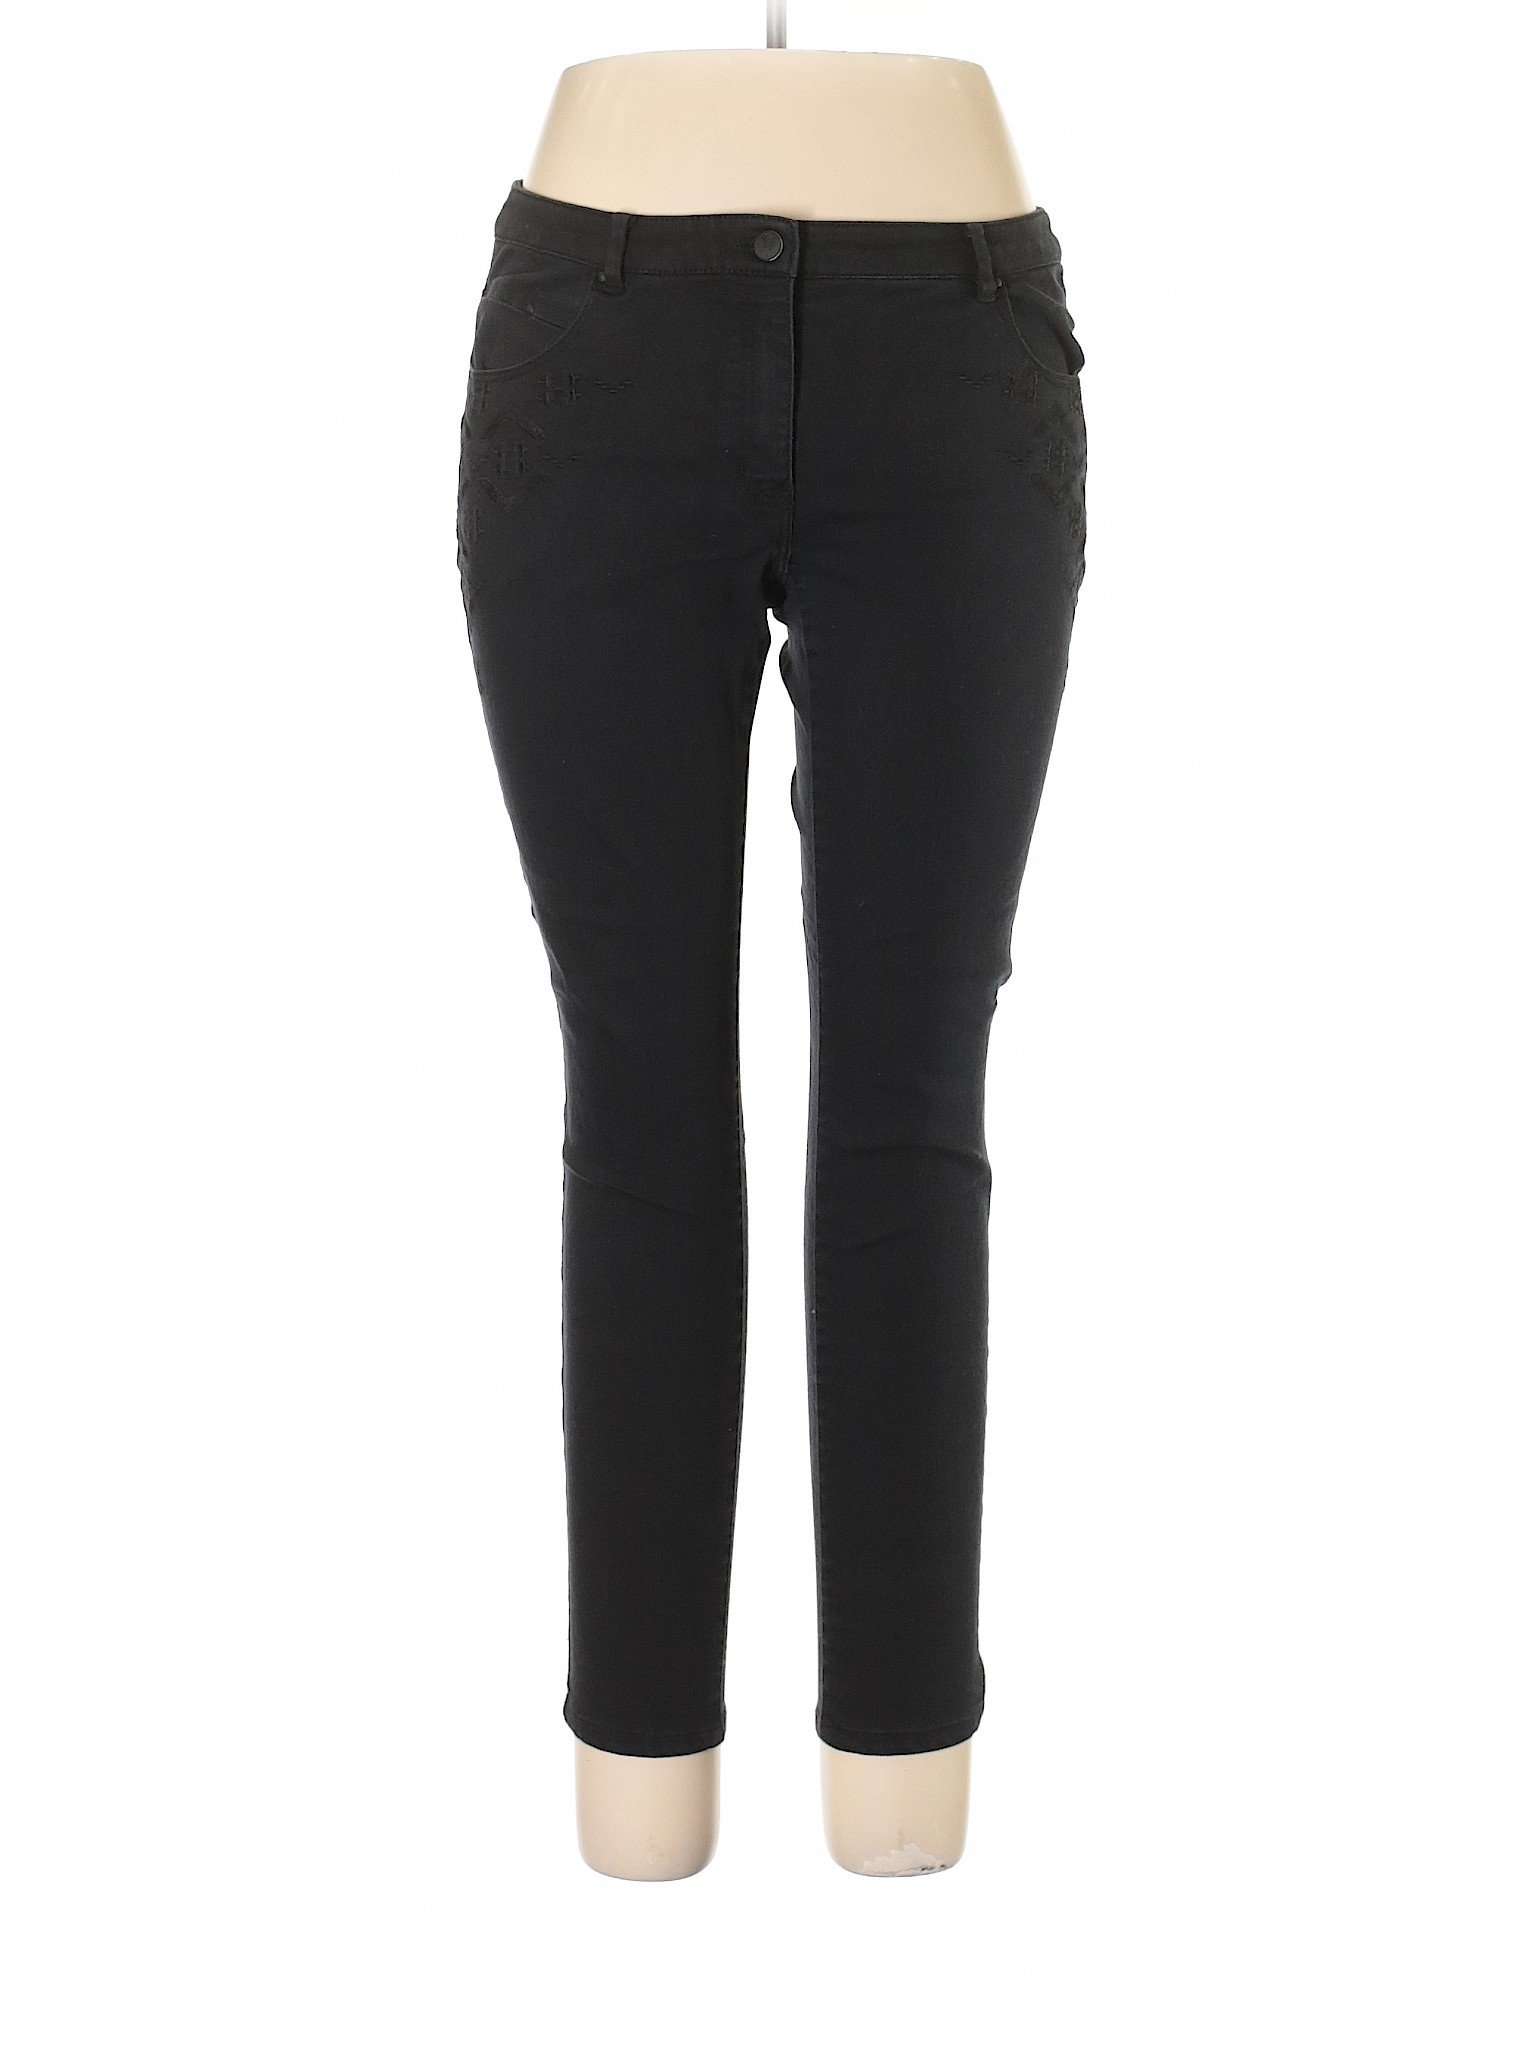 H&M Women Black Jeans 14 | eBay